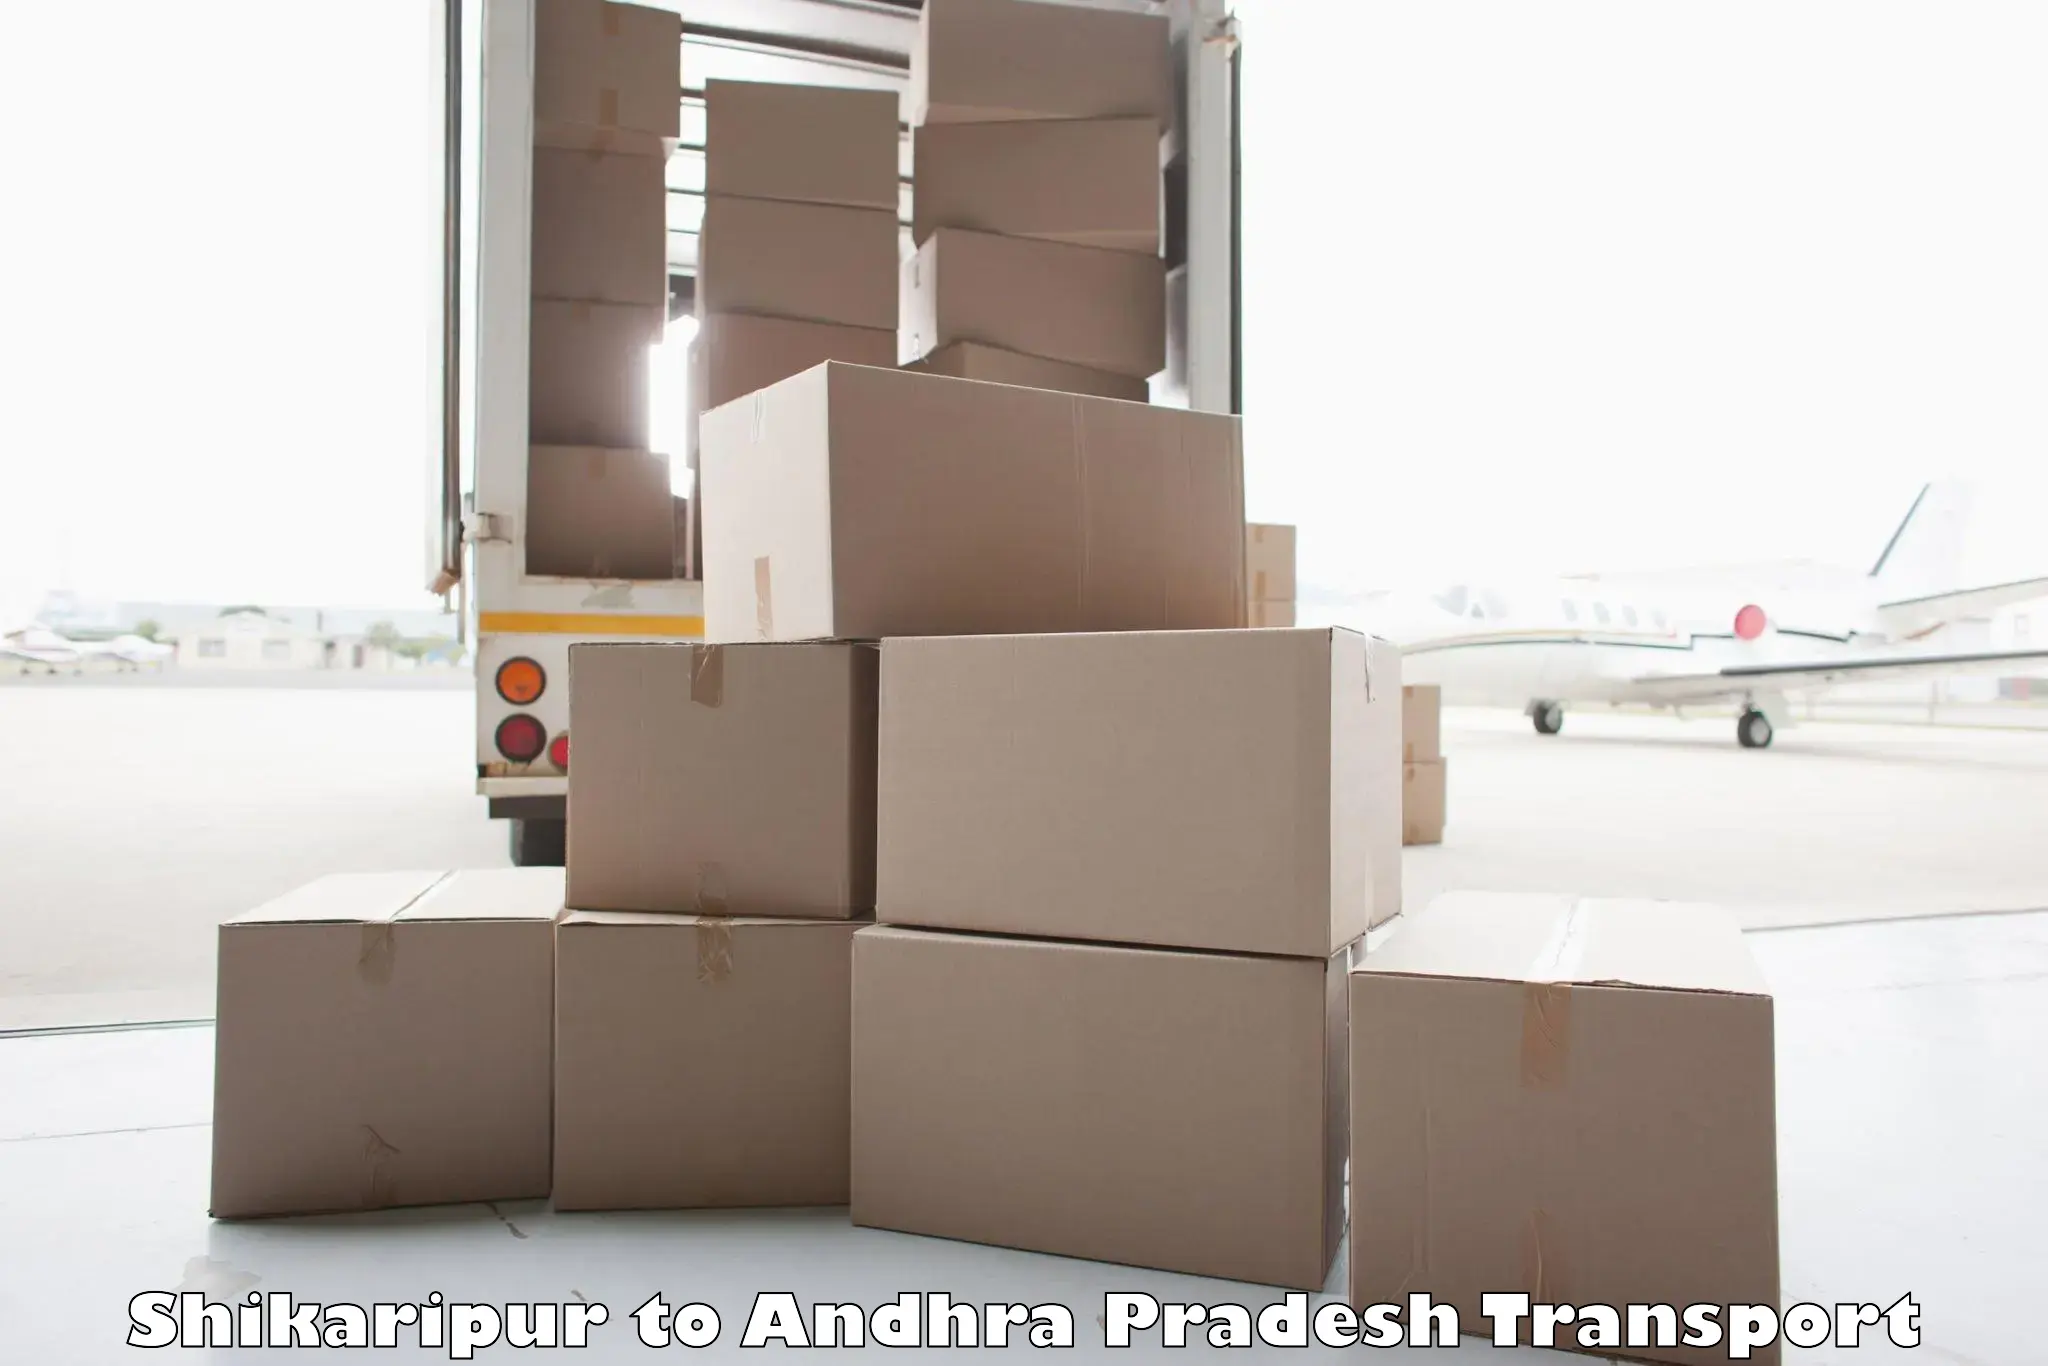 Pick up transport service Shikaripur to Visakhapatnam Port